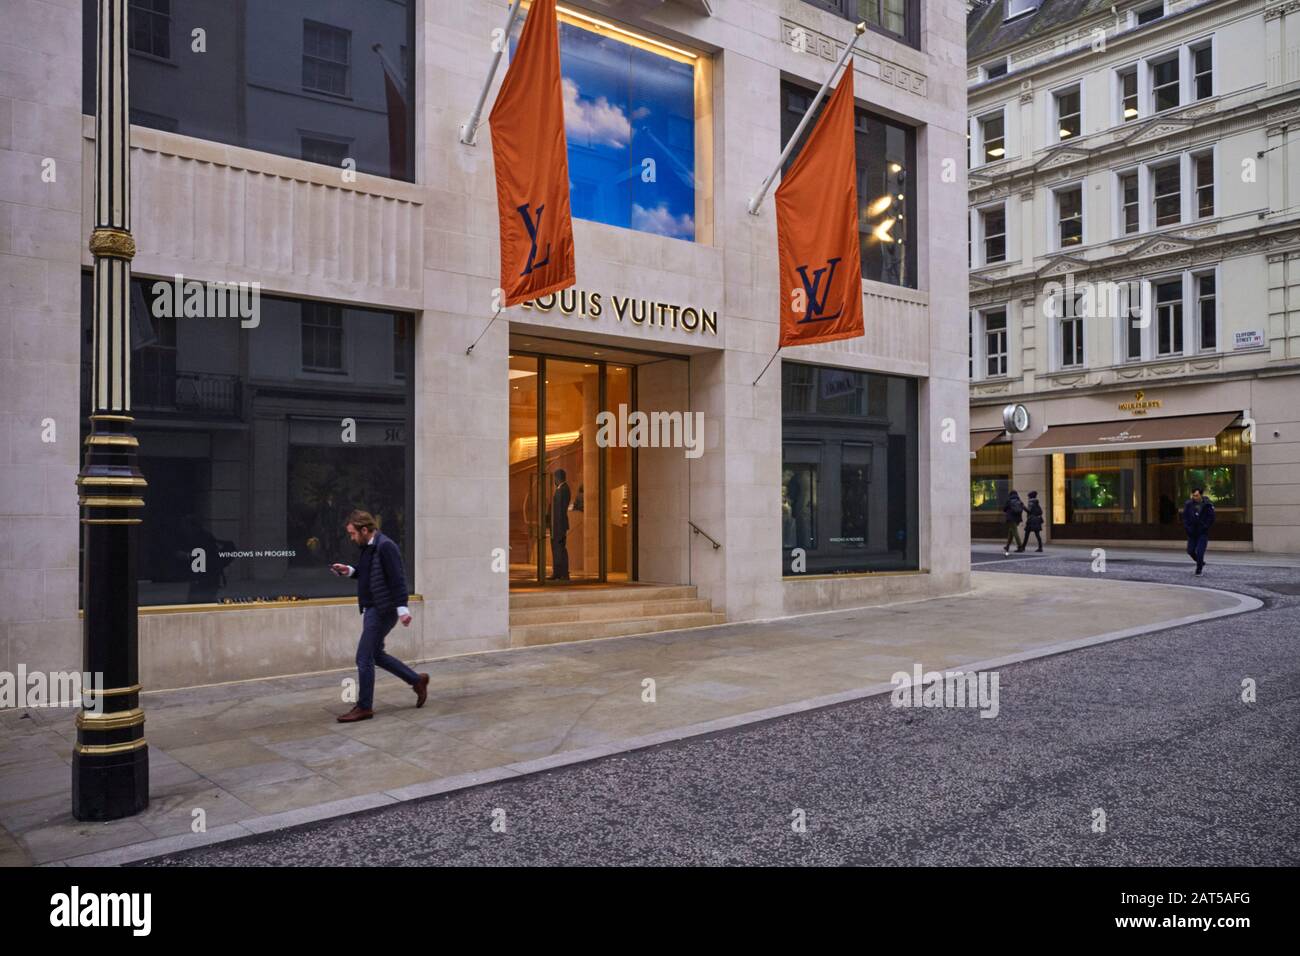 Louis Vuitton Shops In London: Explore The World Of Luxury - London  Kensington Guide